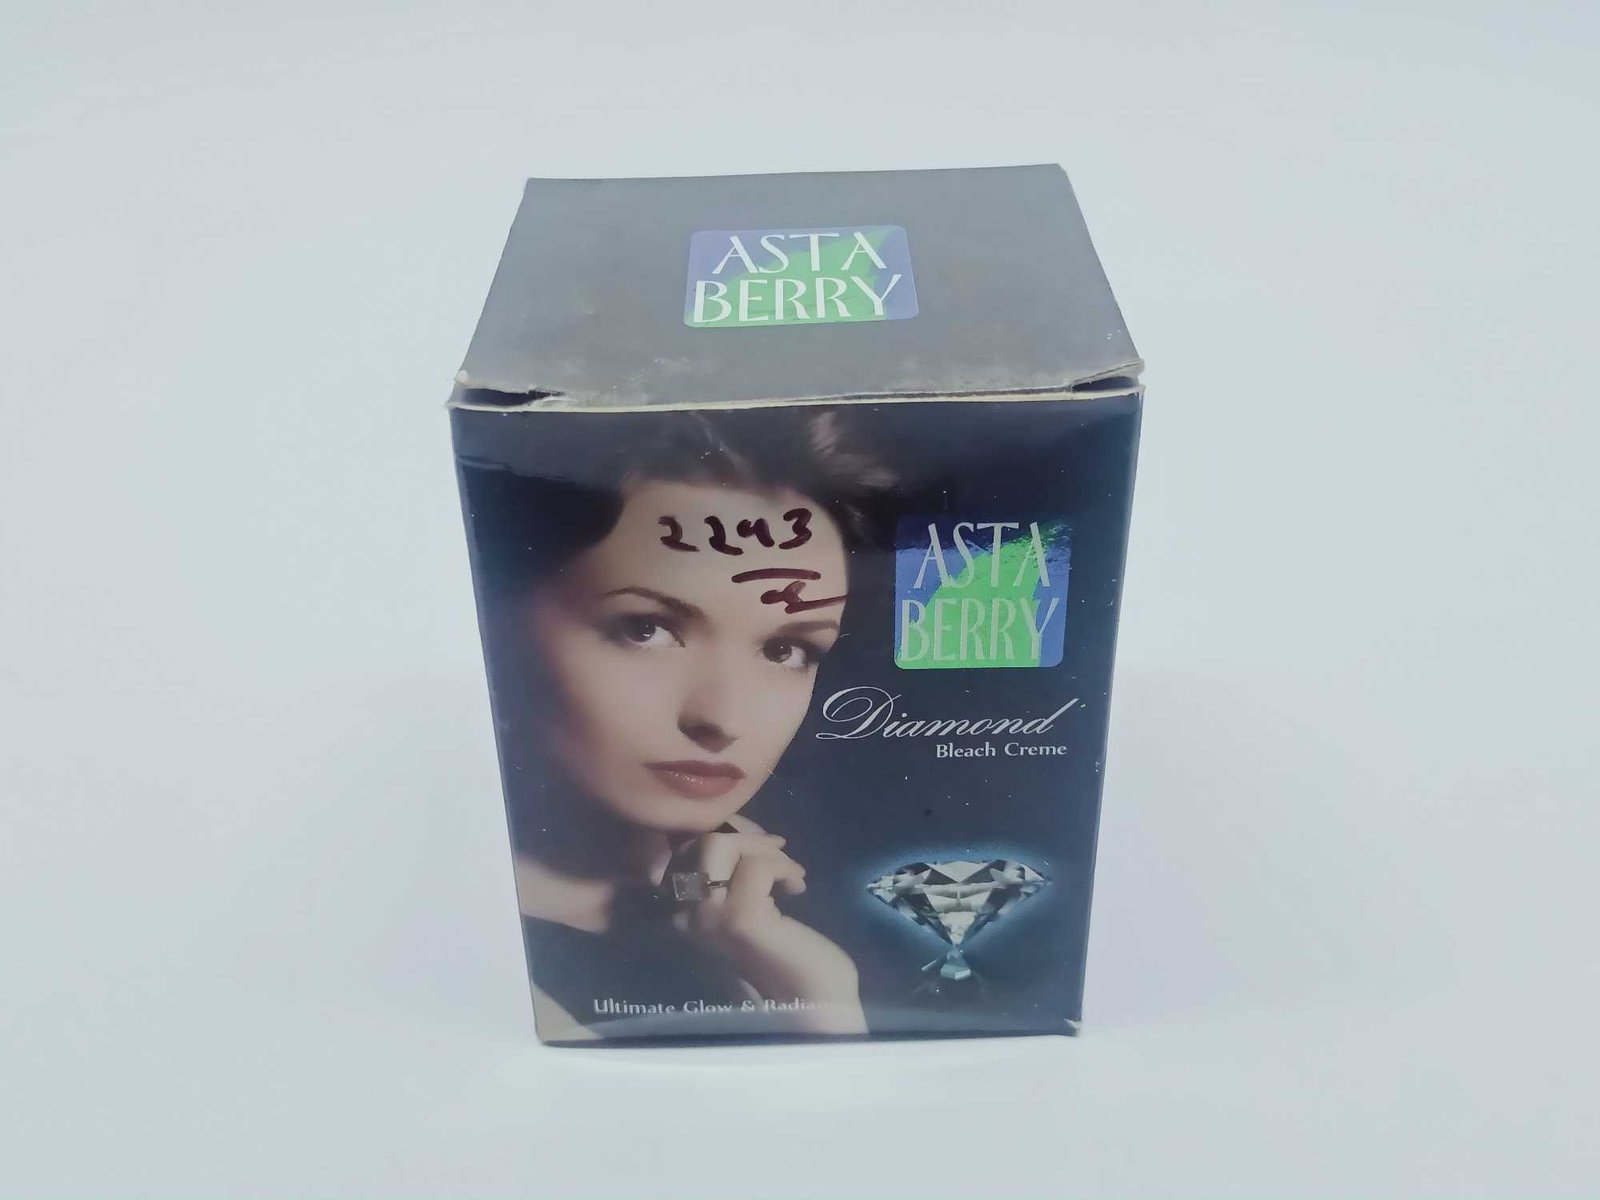 Asta Berry Diamond Bleach Cream, 42 gram